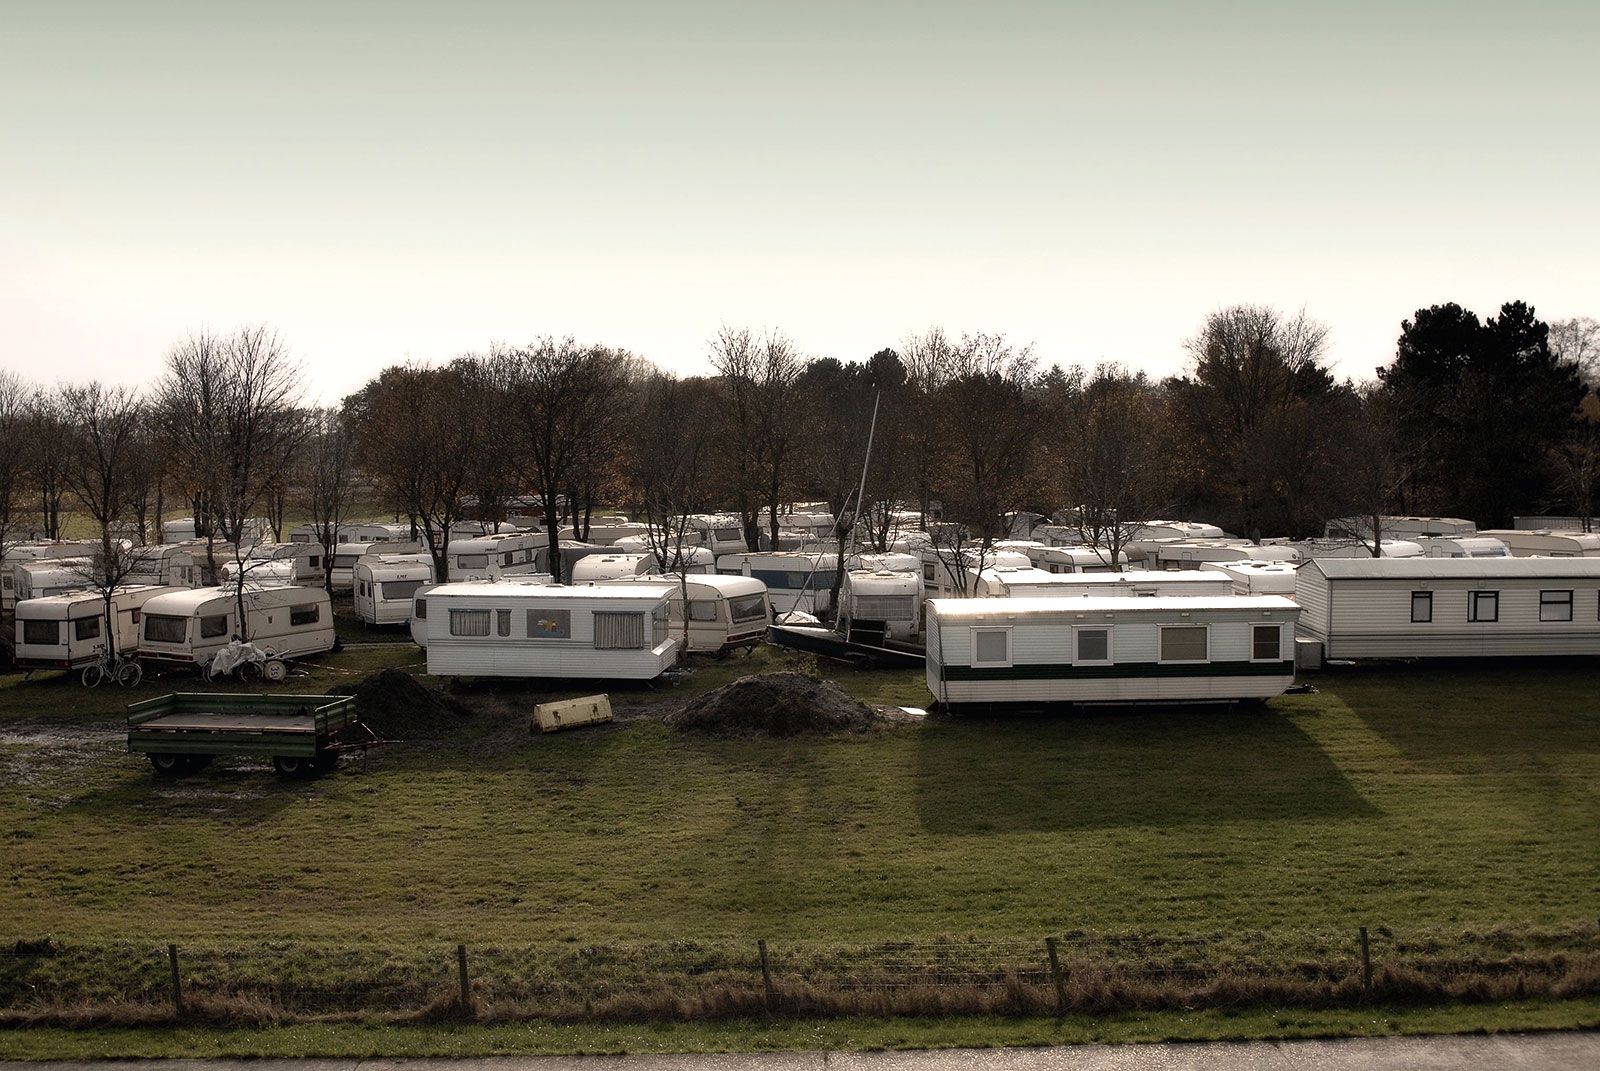 Fotoserie "Campingplatz Dangast im Winter", 2011